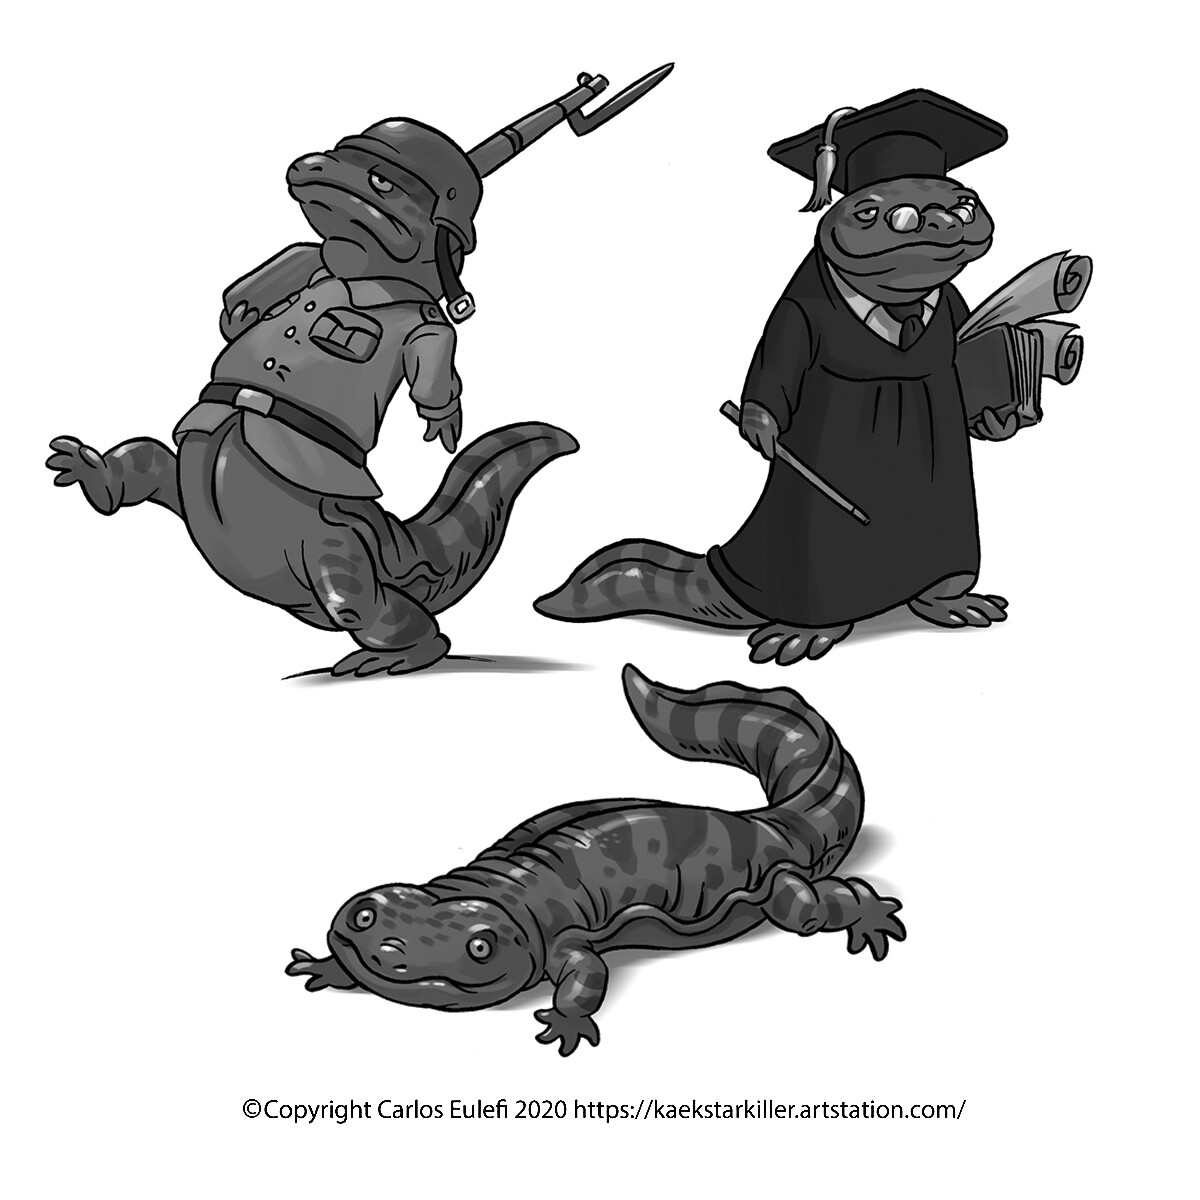 Some Tapa-Tapa salamanders studies and sketches